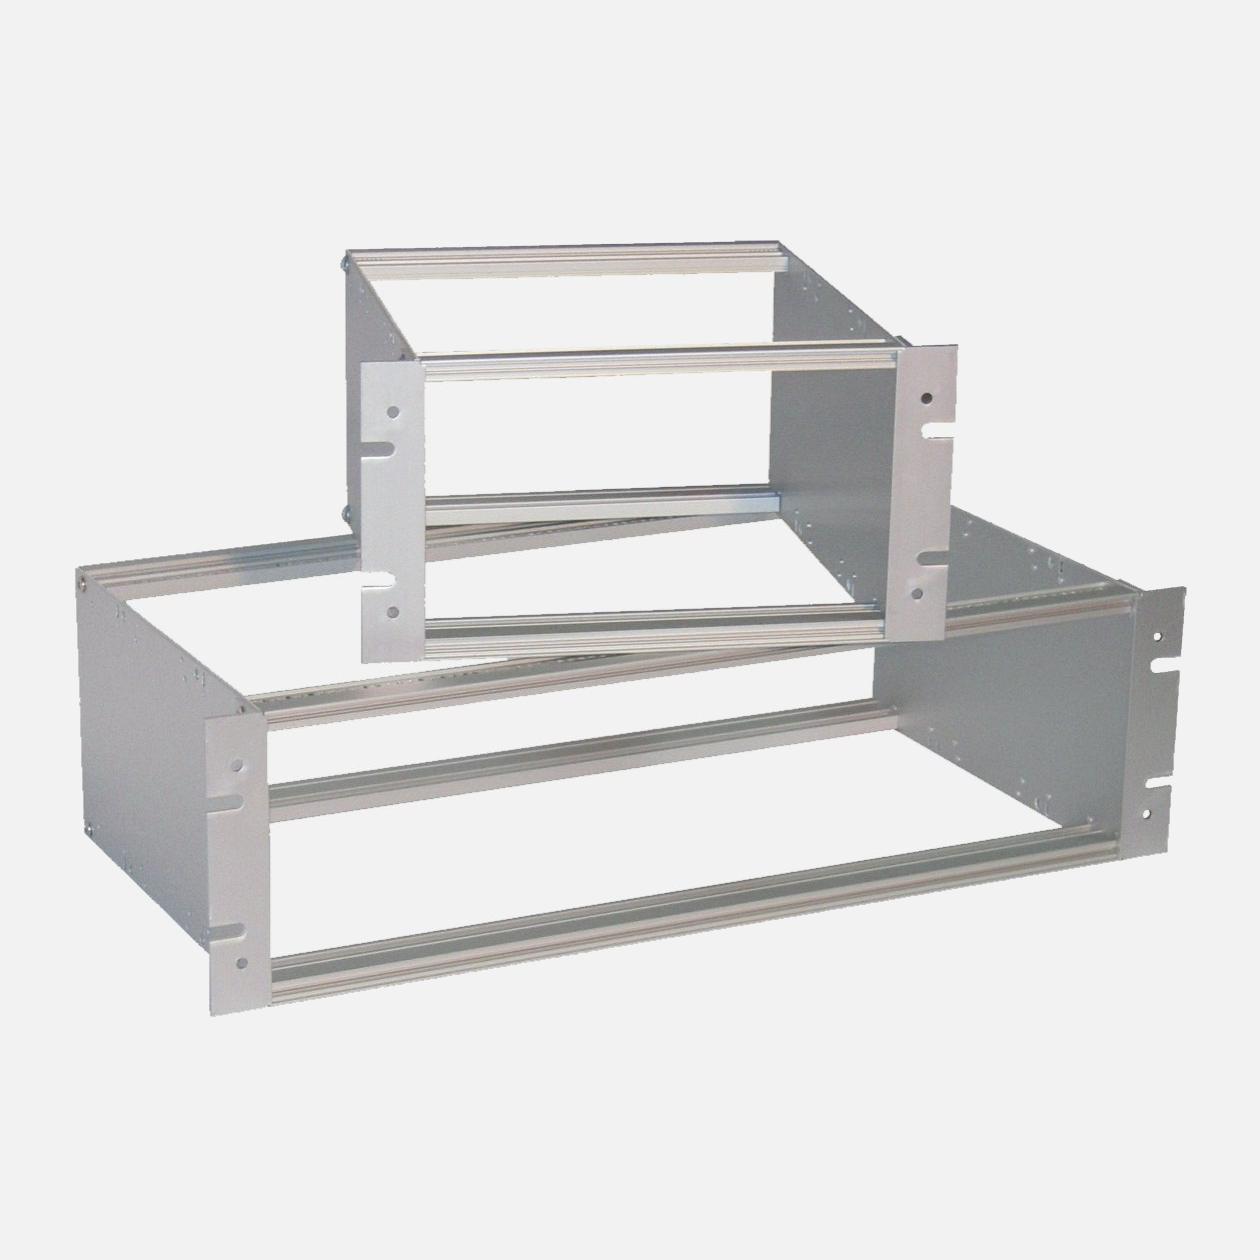 Product Module rack - Gie-Tec GmbH image